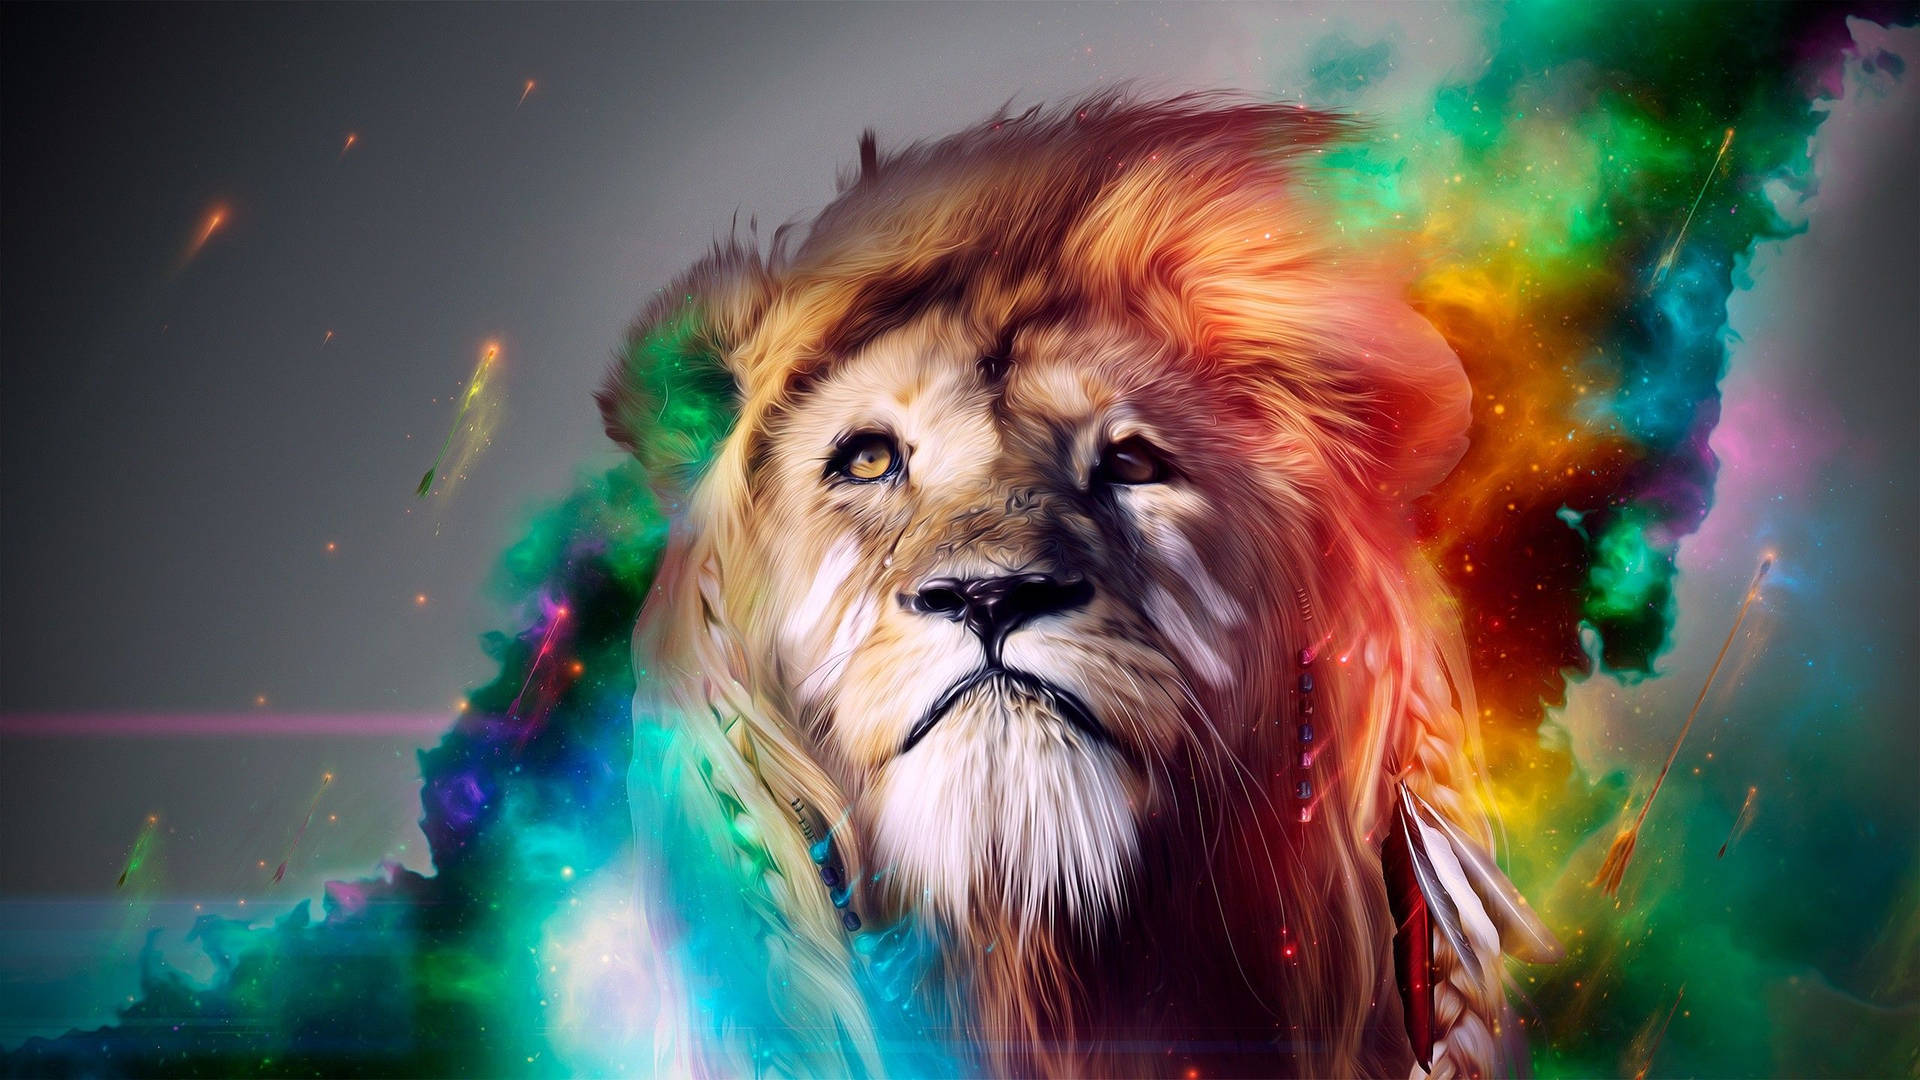 Roaring Lion in Colorful Smoke Wallpaper